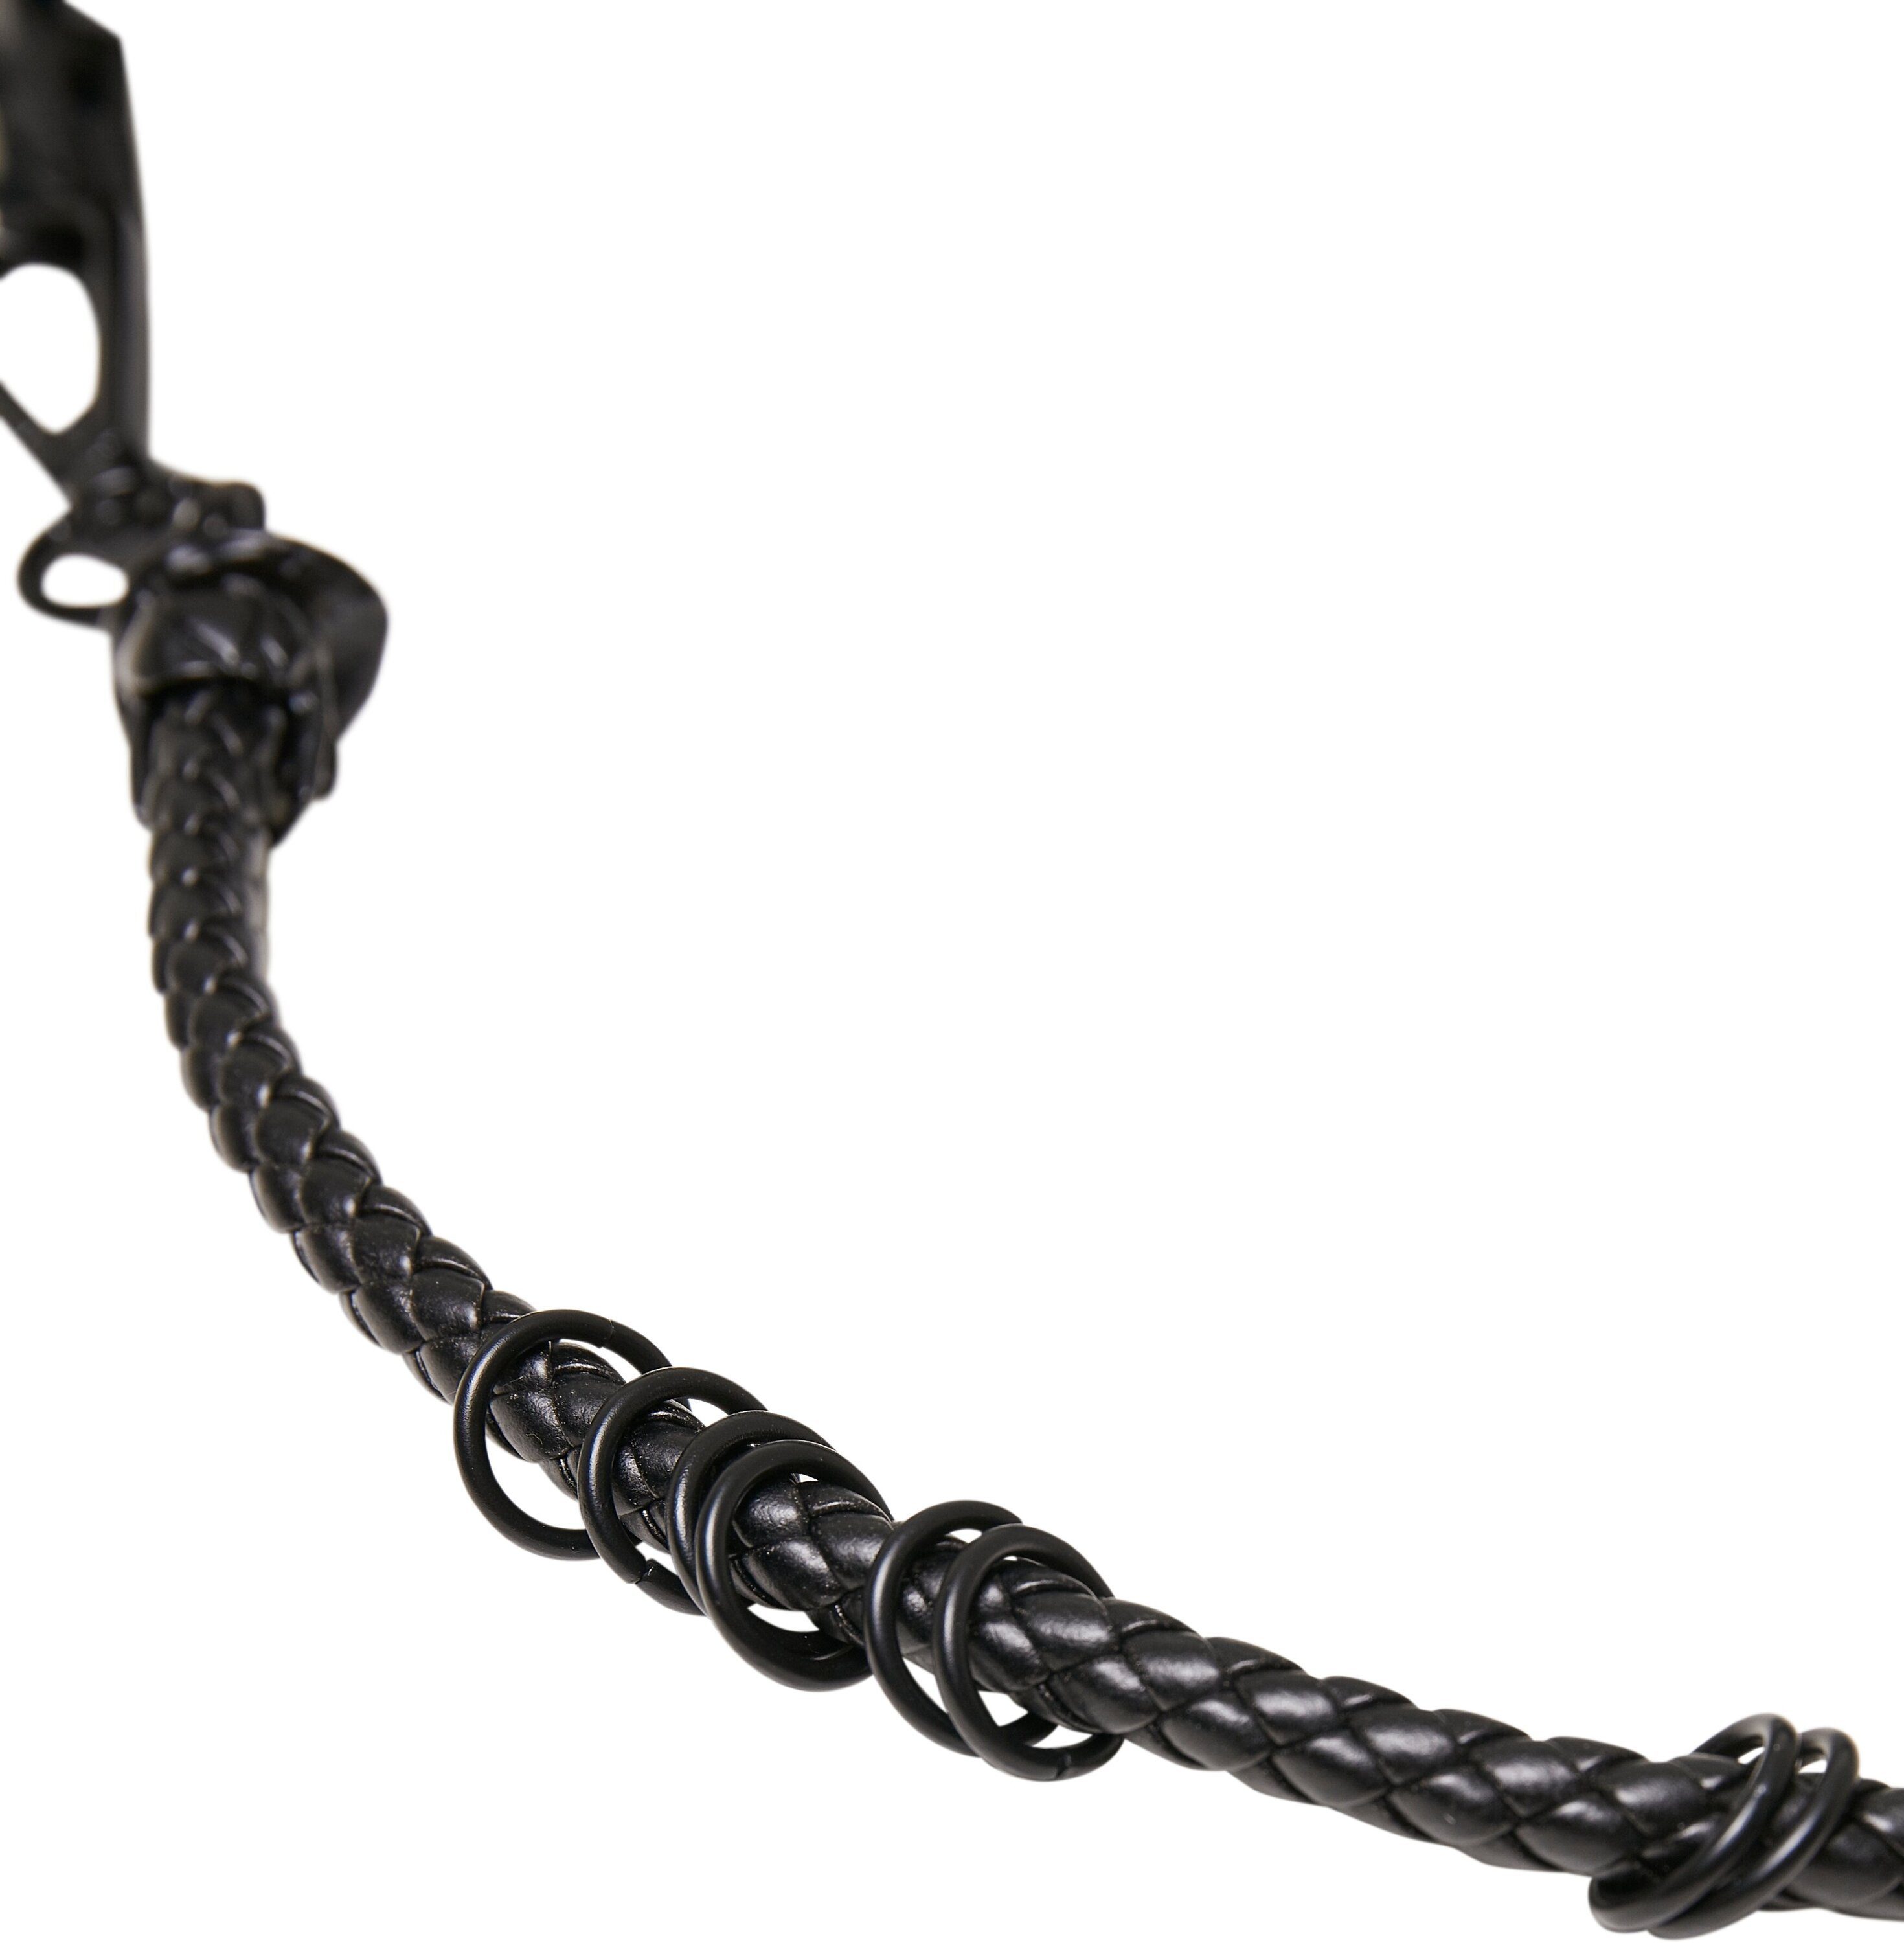 URBAN Accessories With Belt Chain Imitation Key Hüftgürtel CLASSICS Leather